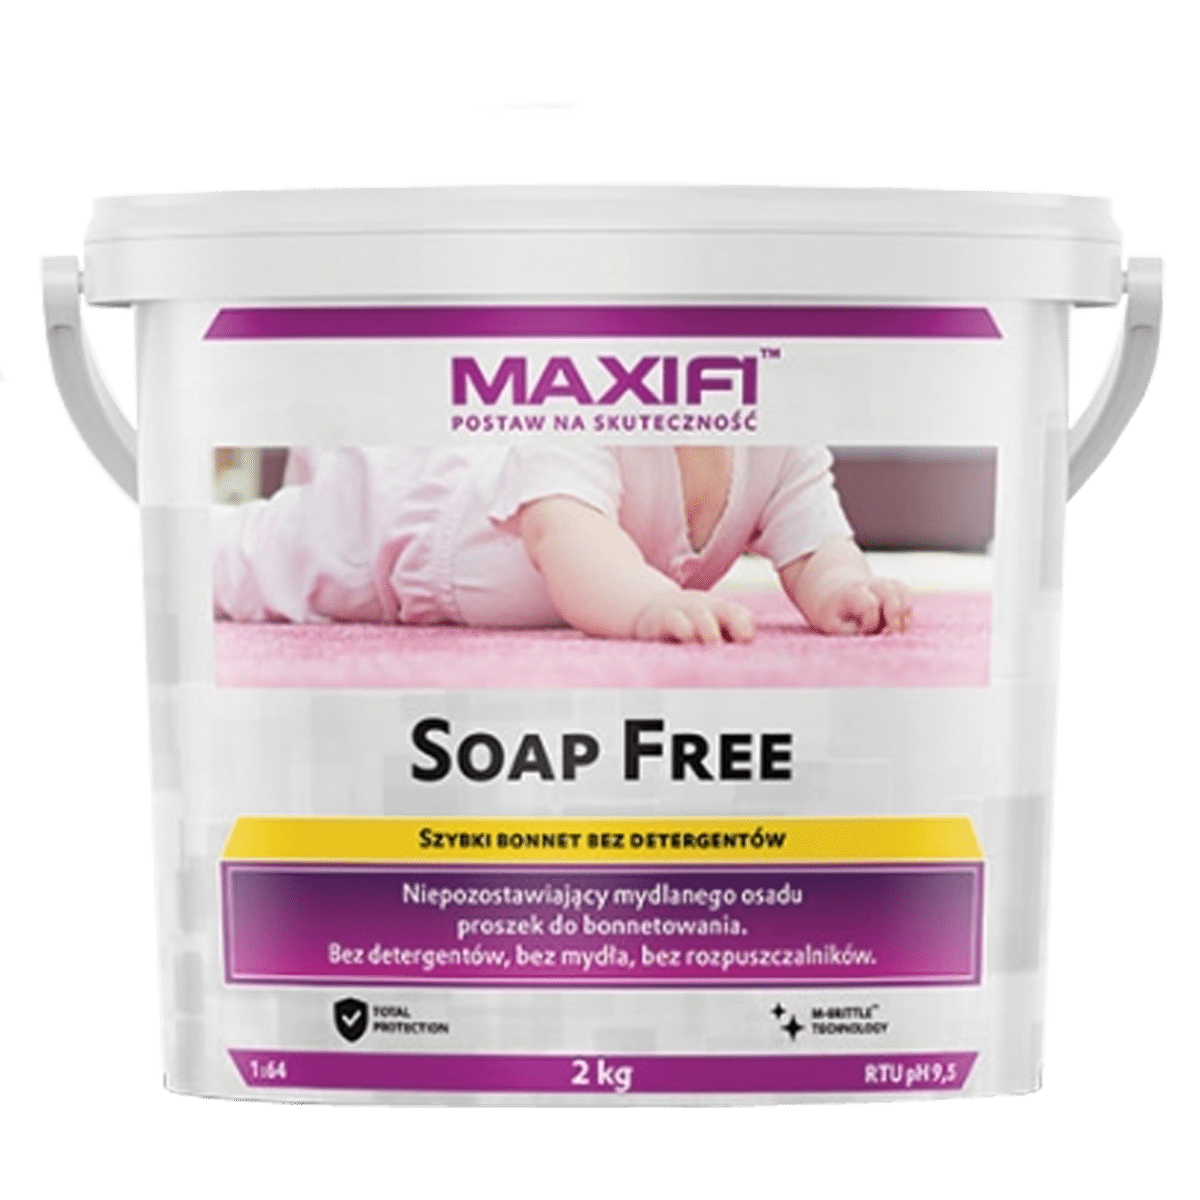 MAXIFI Soap Free 2kg Proszek bez Detergentów do Bonnetowania